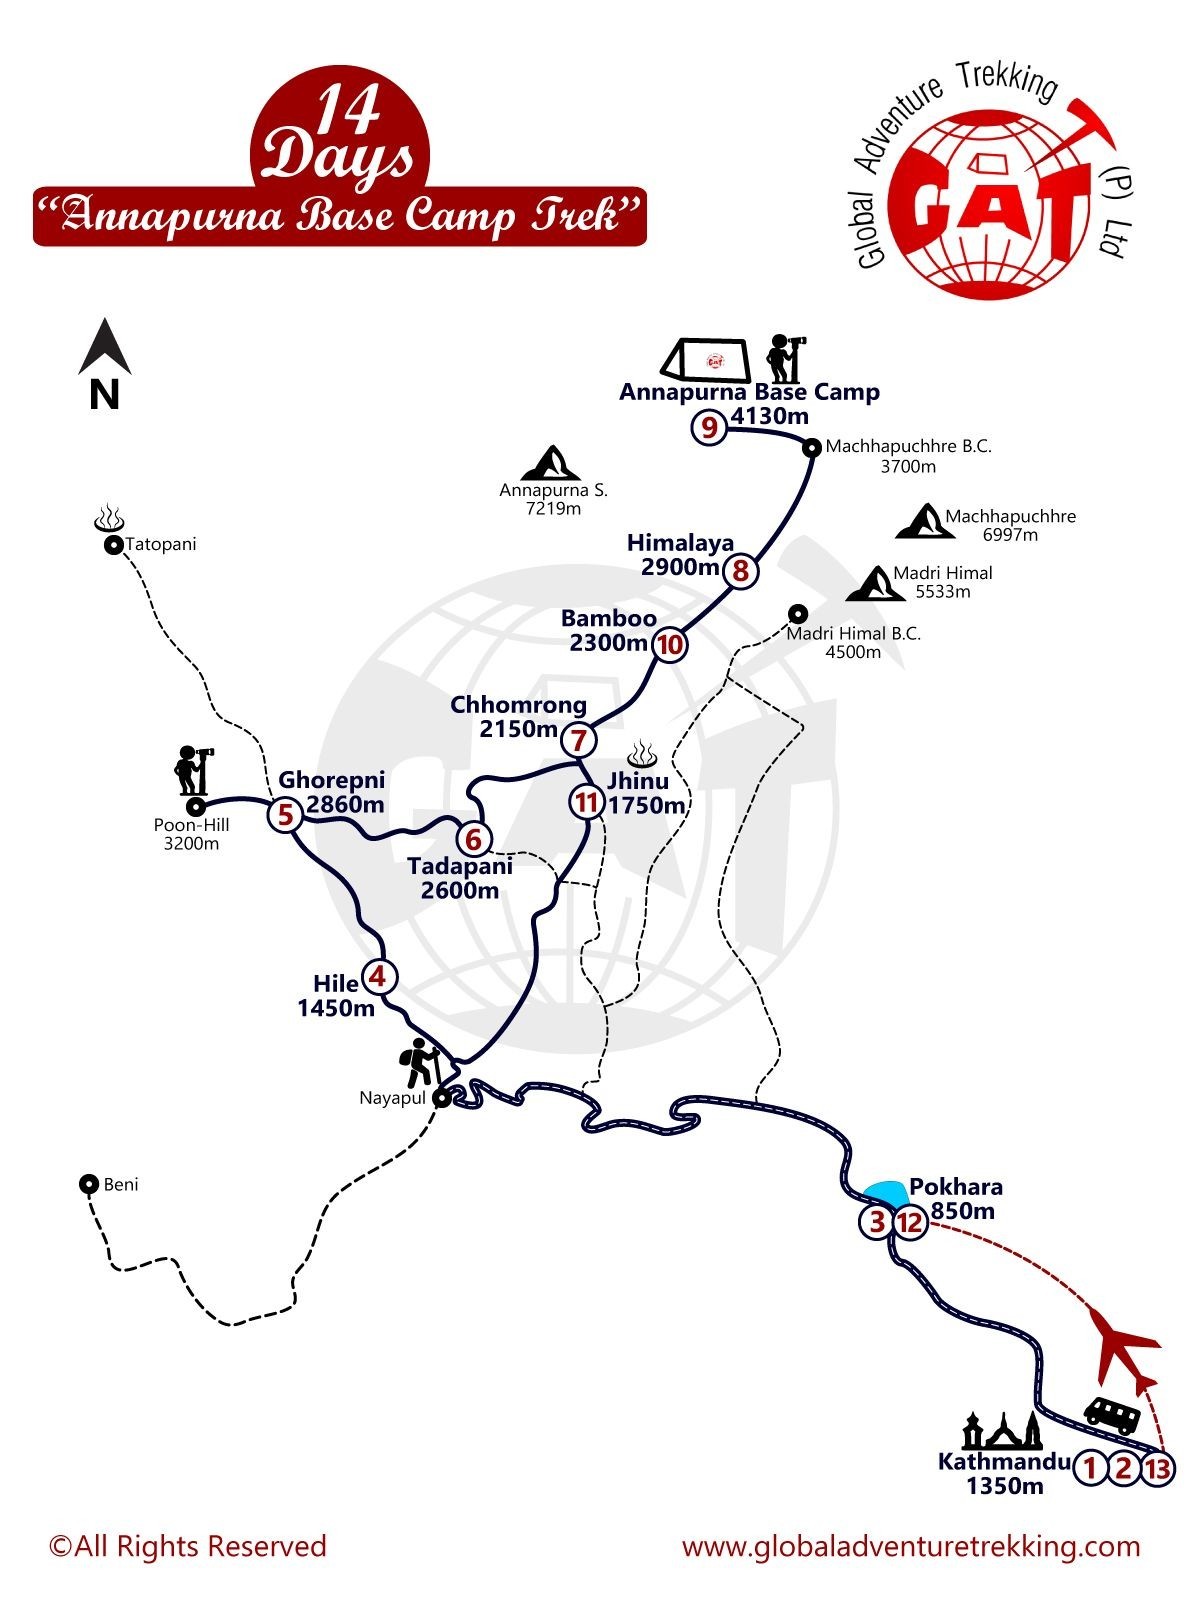 Annapurna Base Camp Trek Cost and Itinerary map